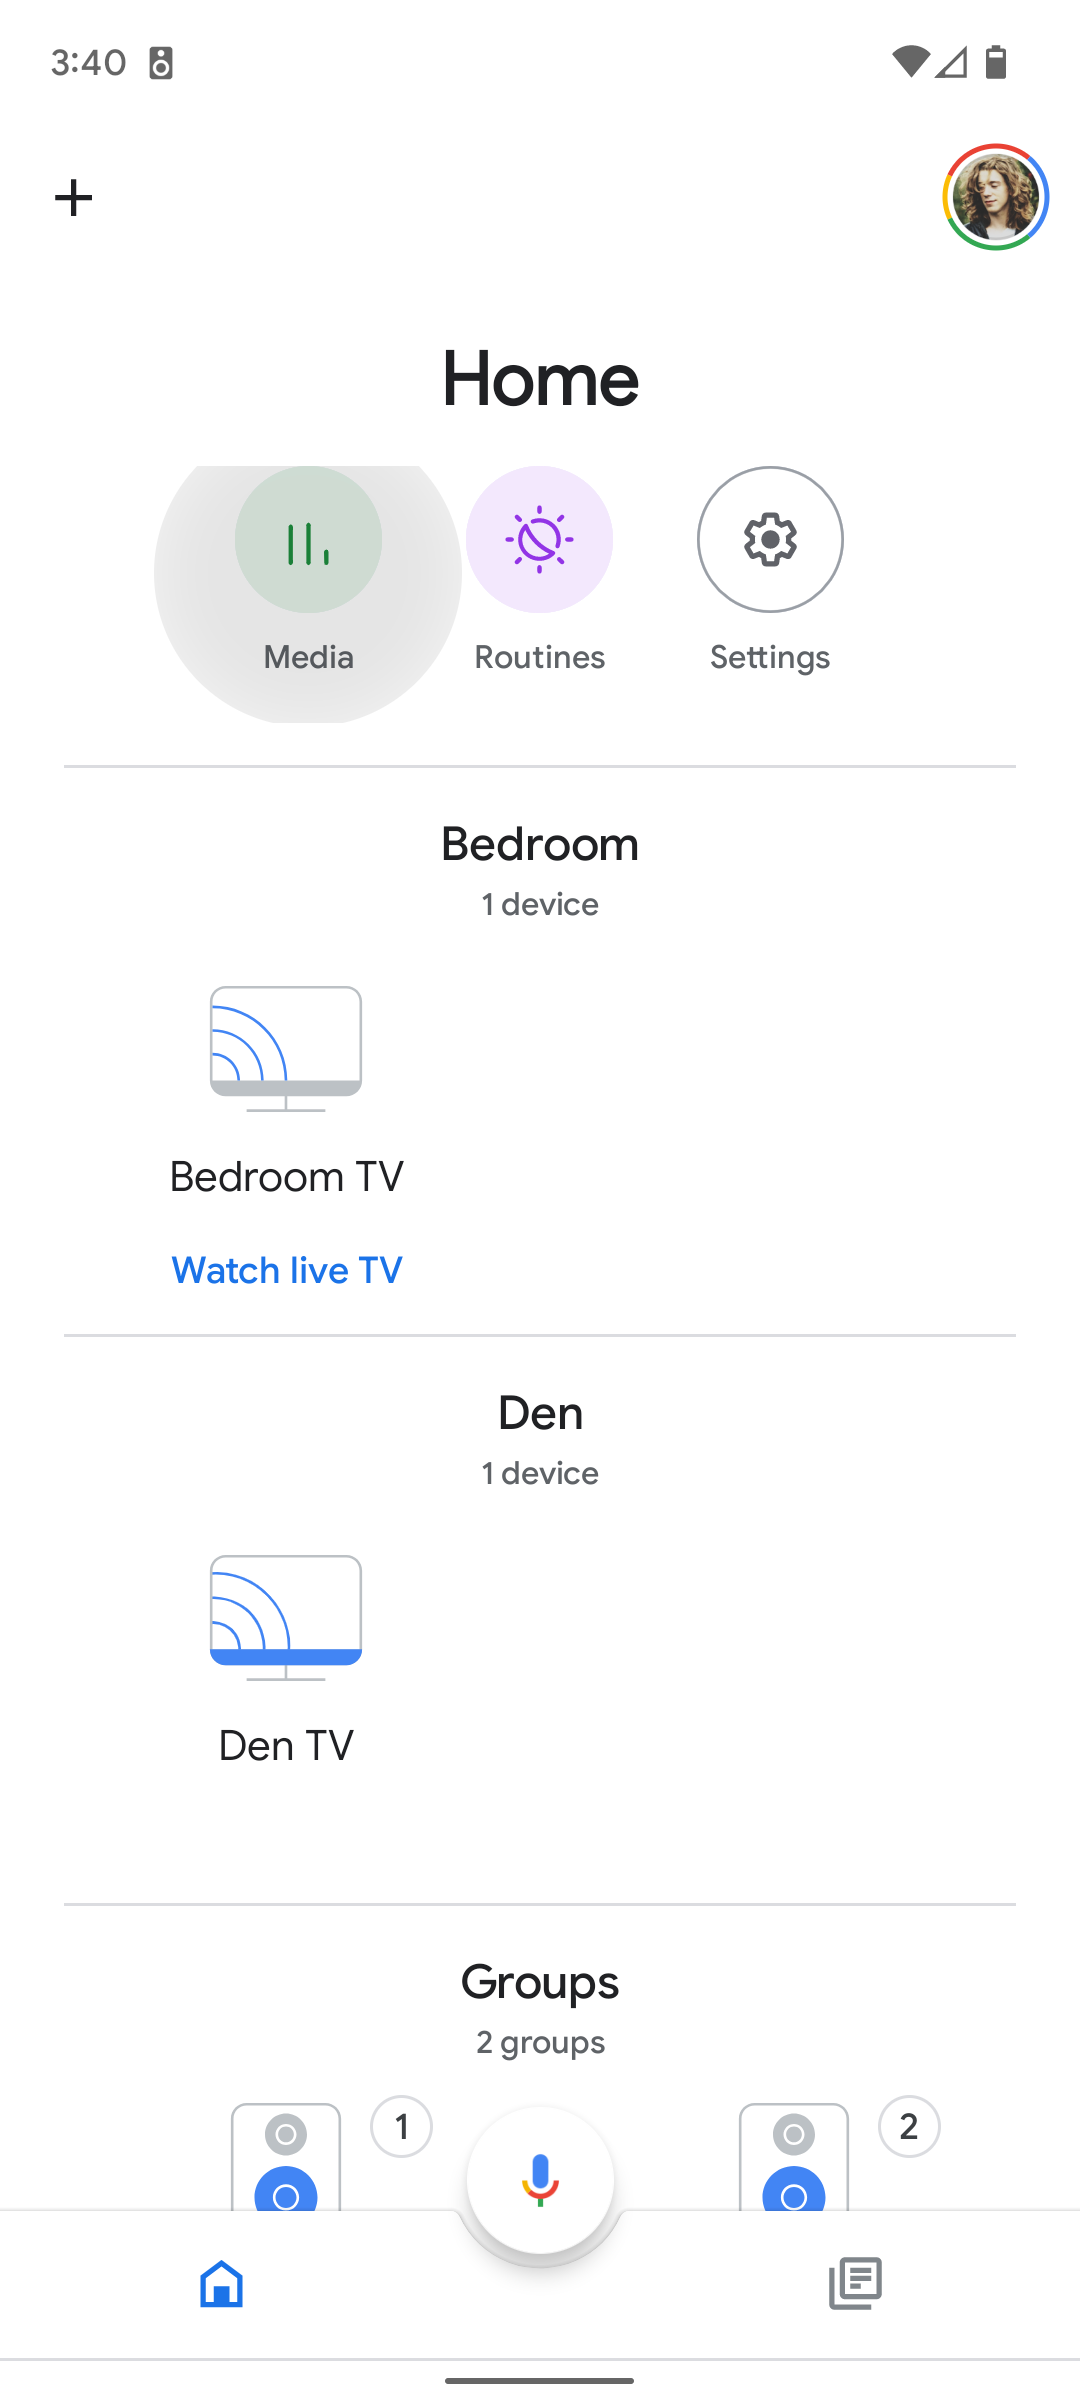 google home app screenshot showing the home screen